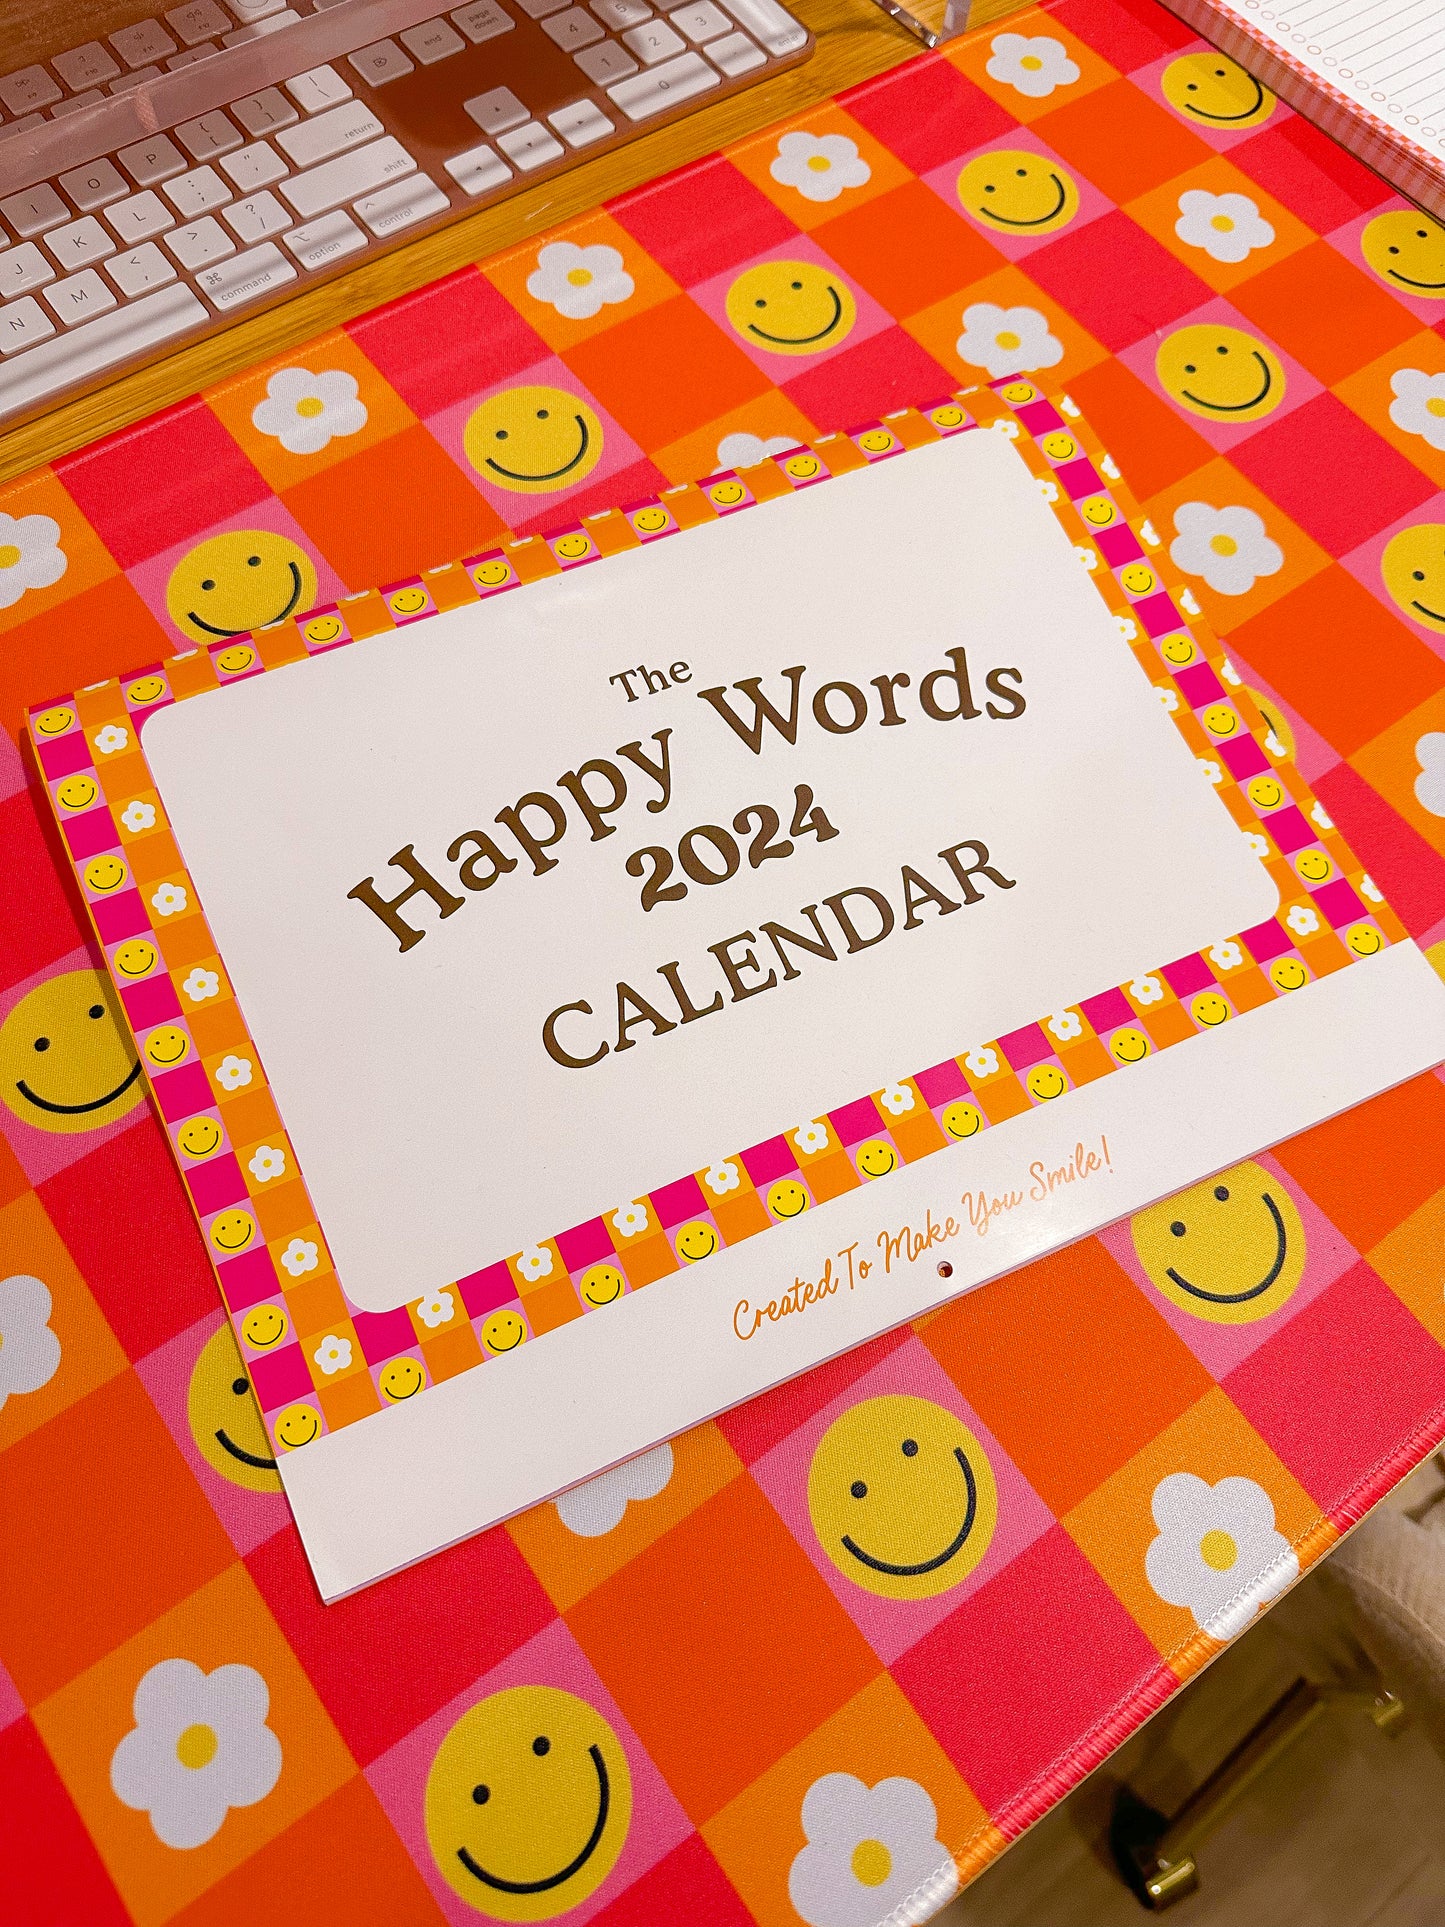 The 2024 Happy Words Wall Calendar